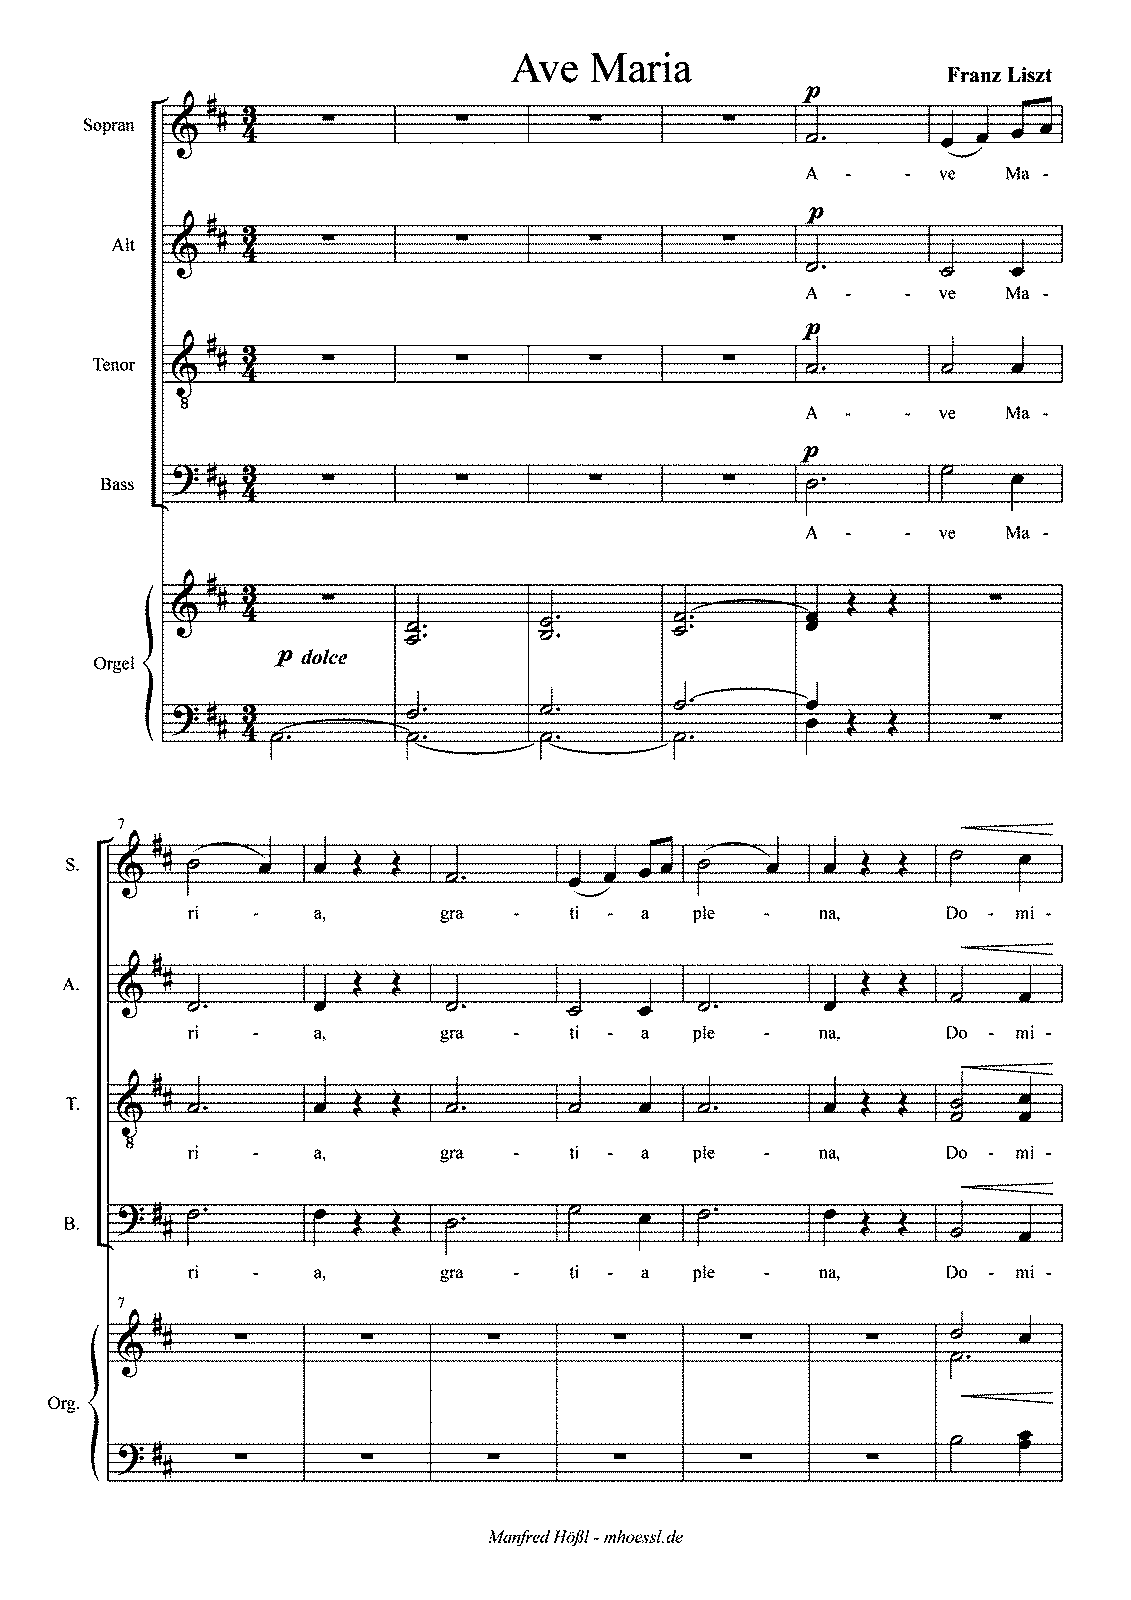 Ave Maria II, S.38 (Liszt, Franz) - IMSLP